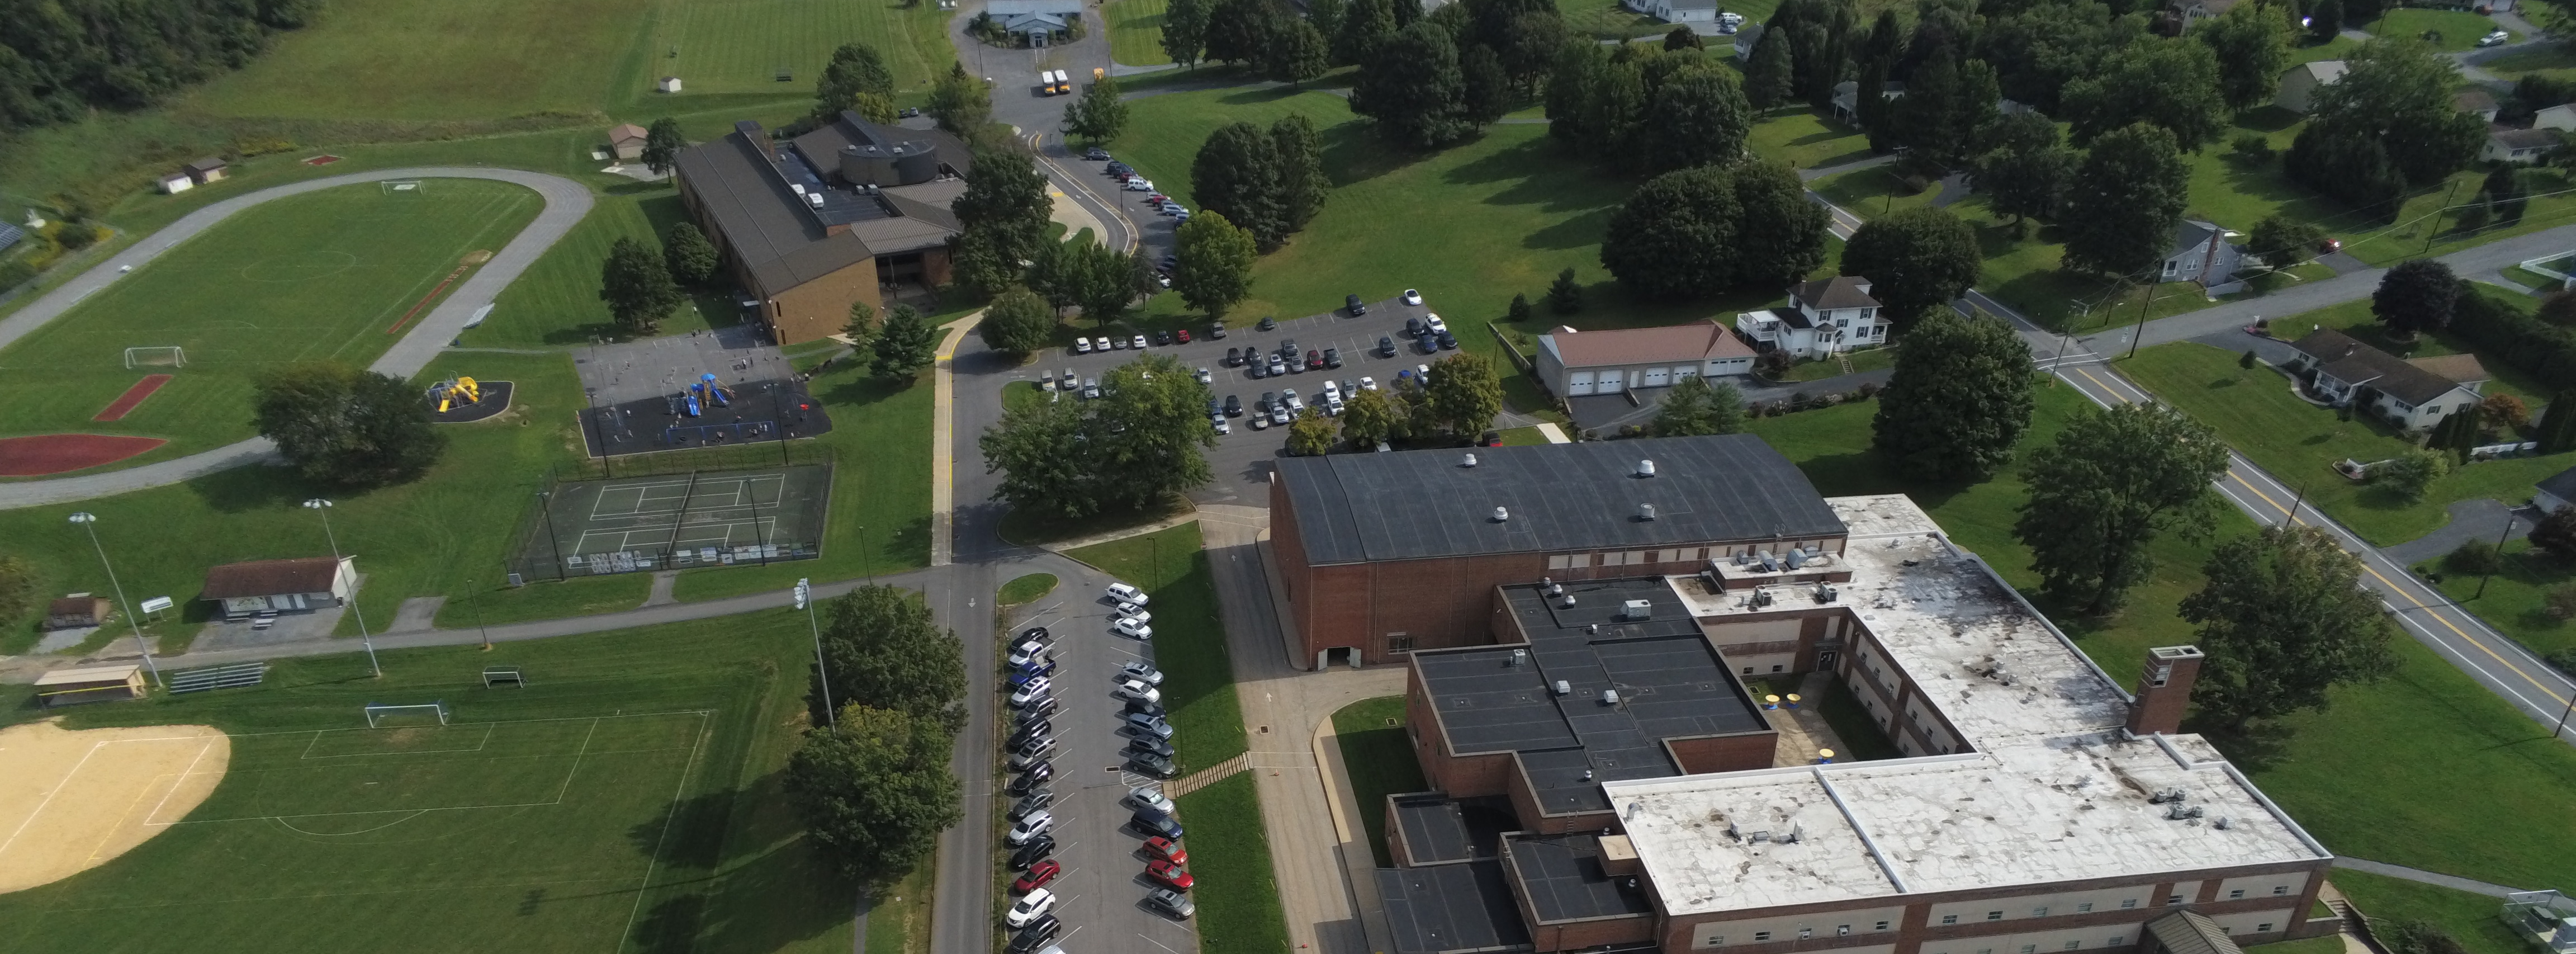 Aerial View of School Campus